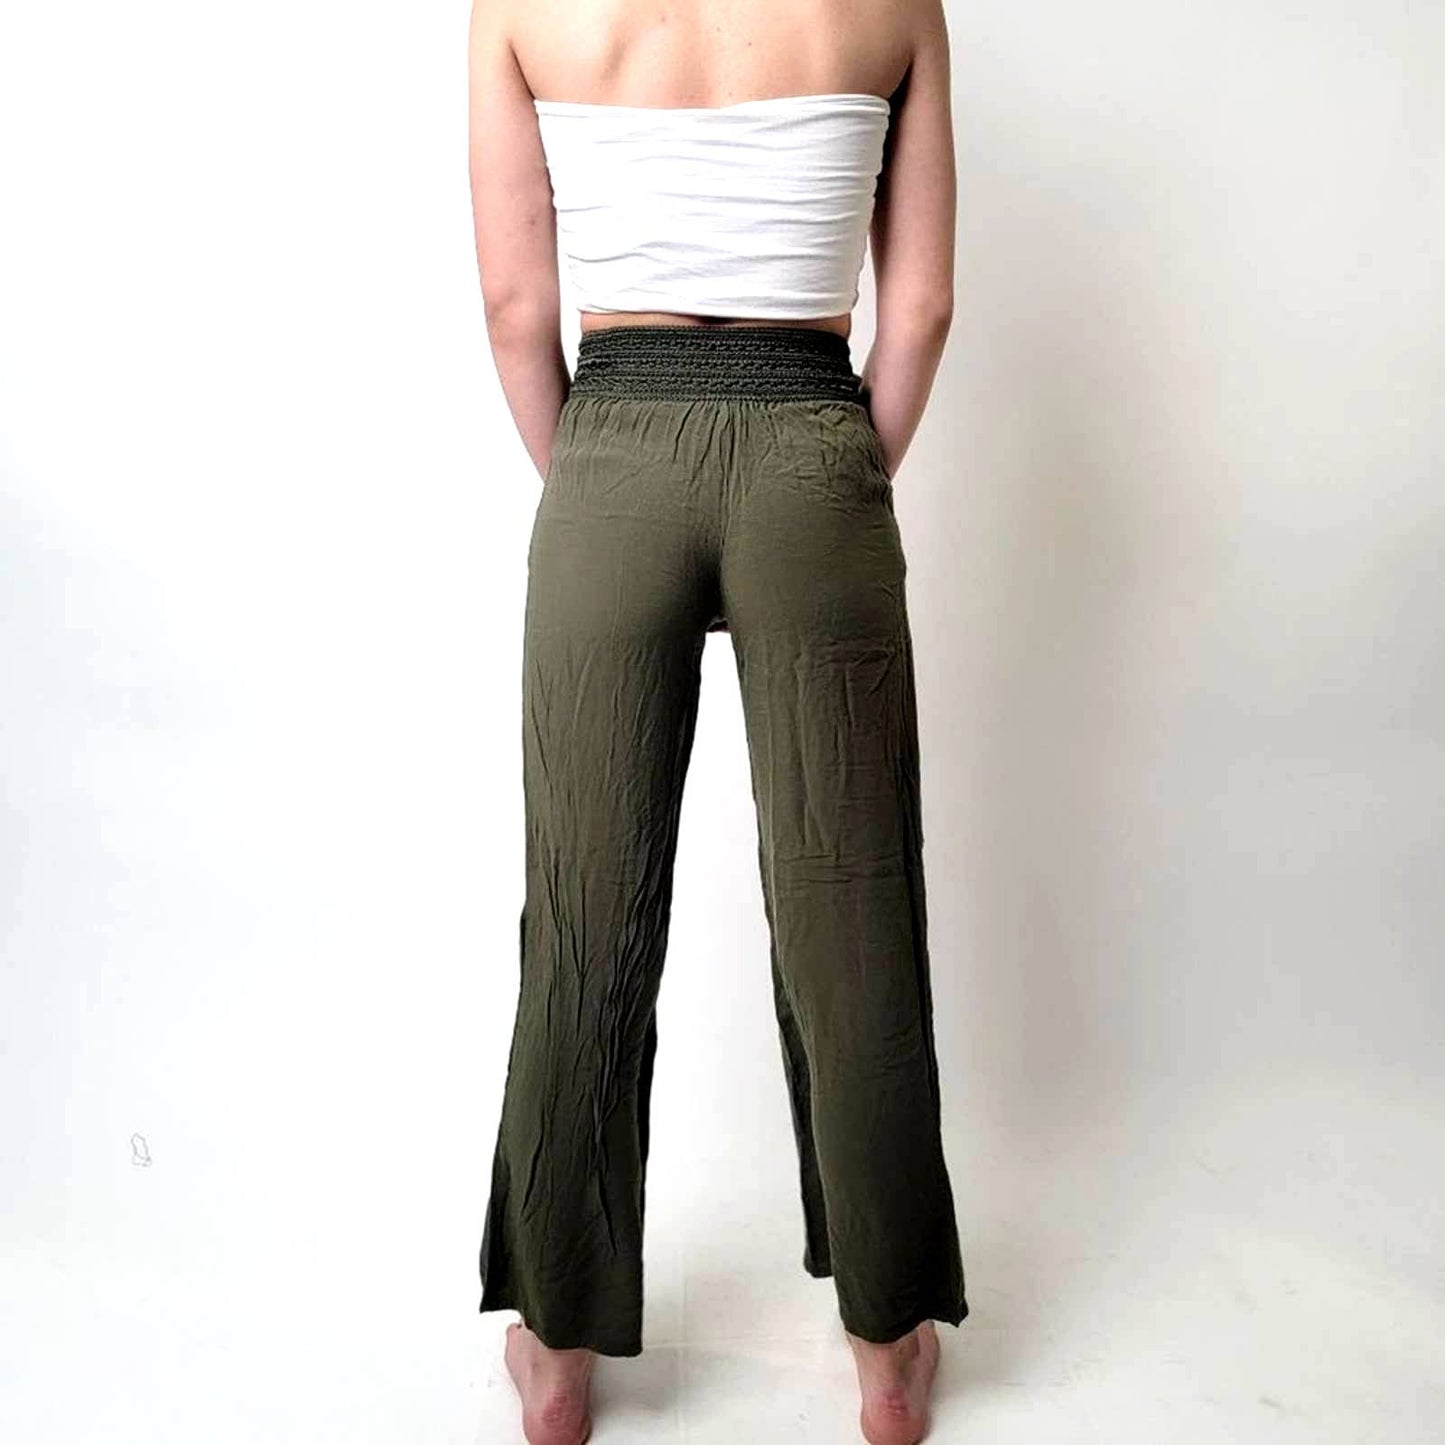 Joe B. Shirred Waist Olive Green Pants - XS